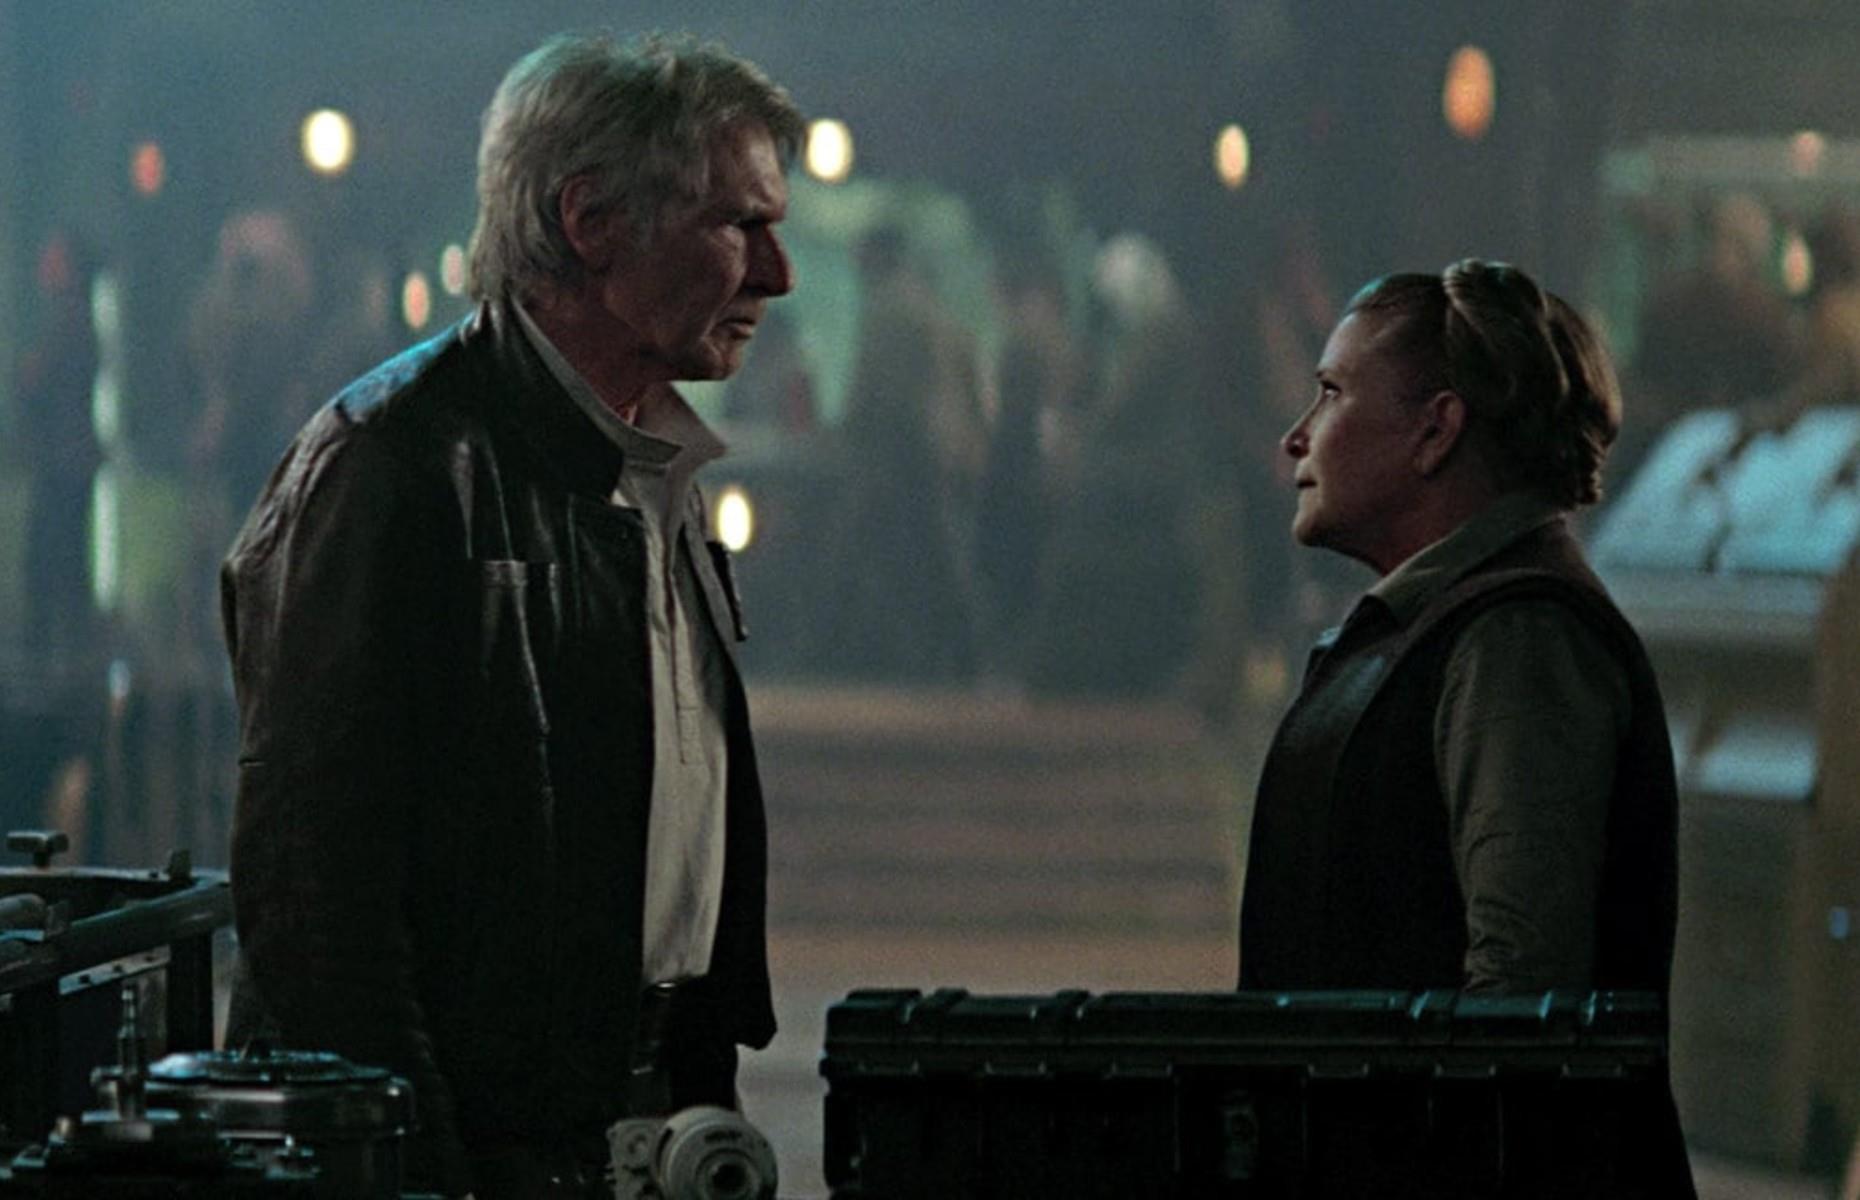 Star Wars: The Force Awakens (2015) – cost: $533.2 million (£446.3m); profit: $566.8 million (£473m)